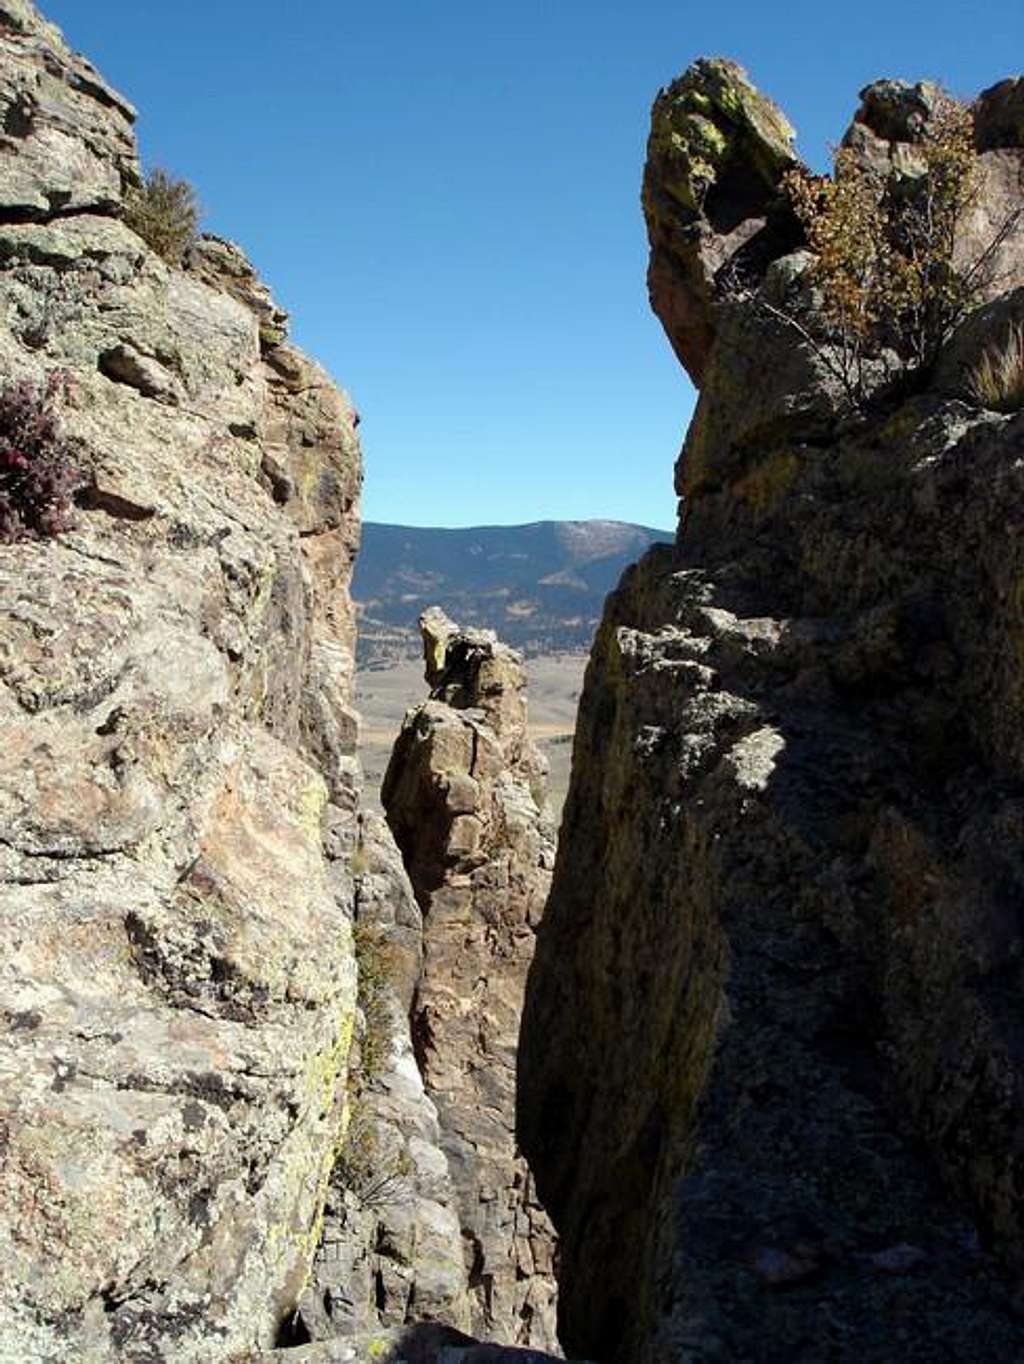 Eagle Rock has lots of cliffs...